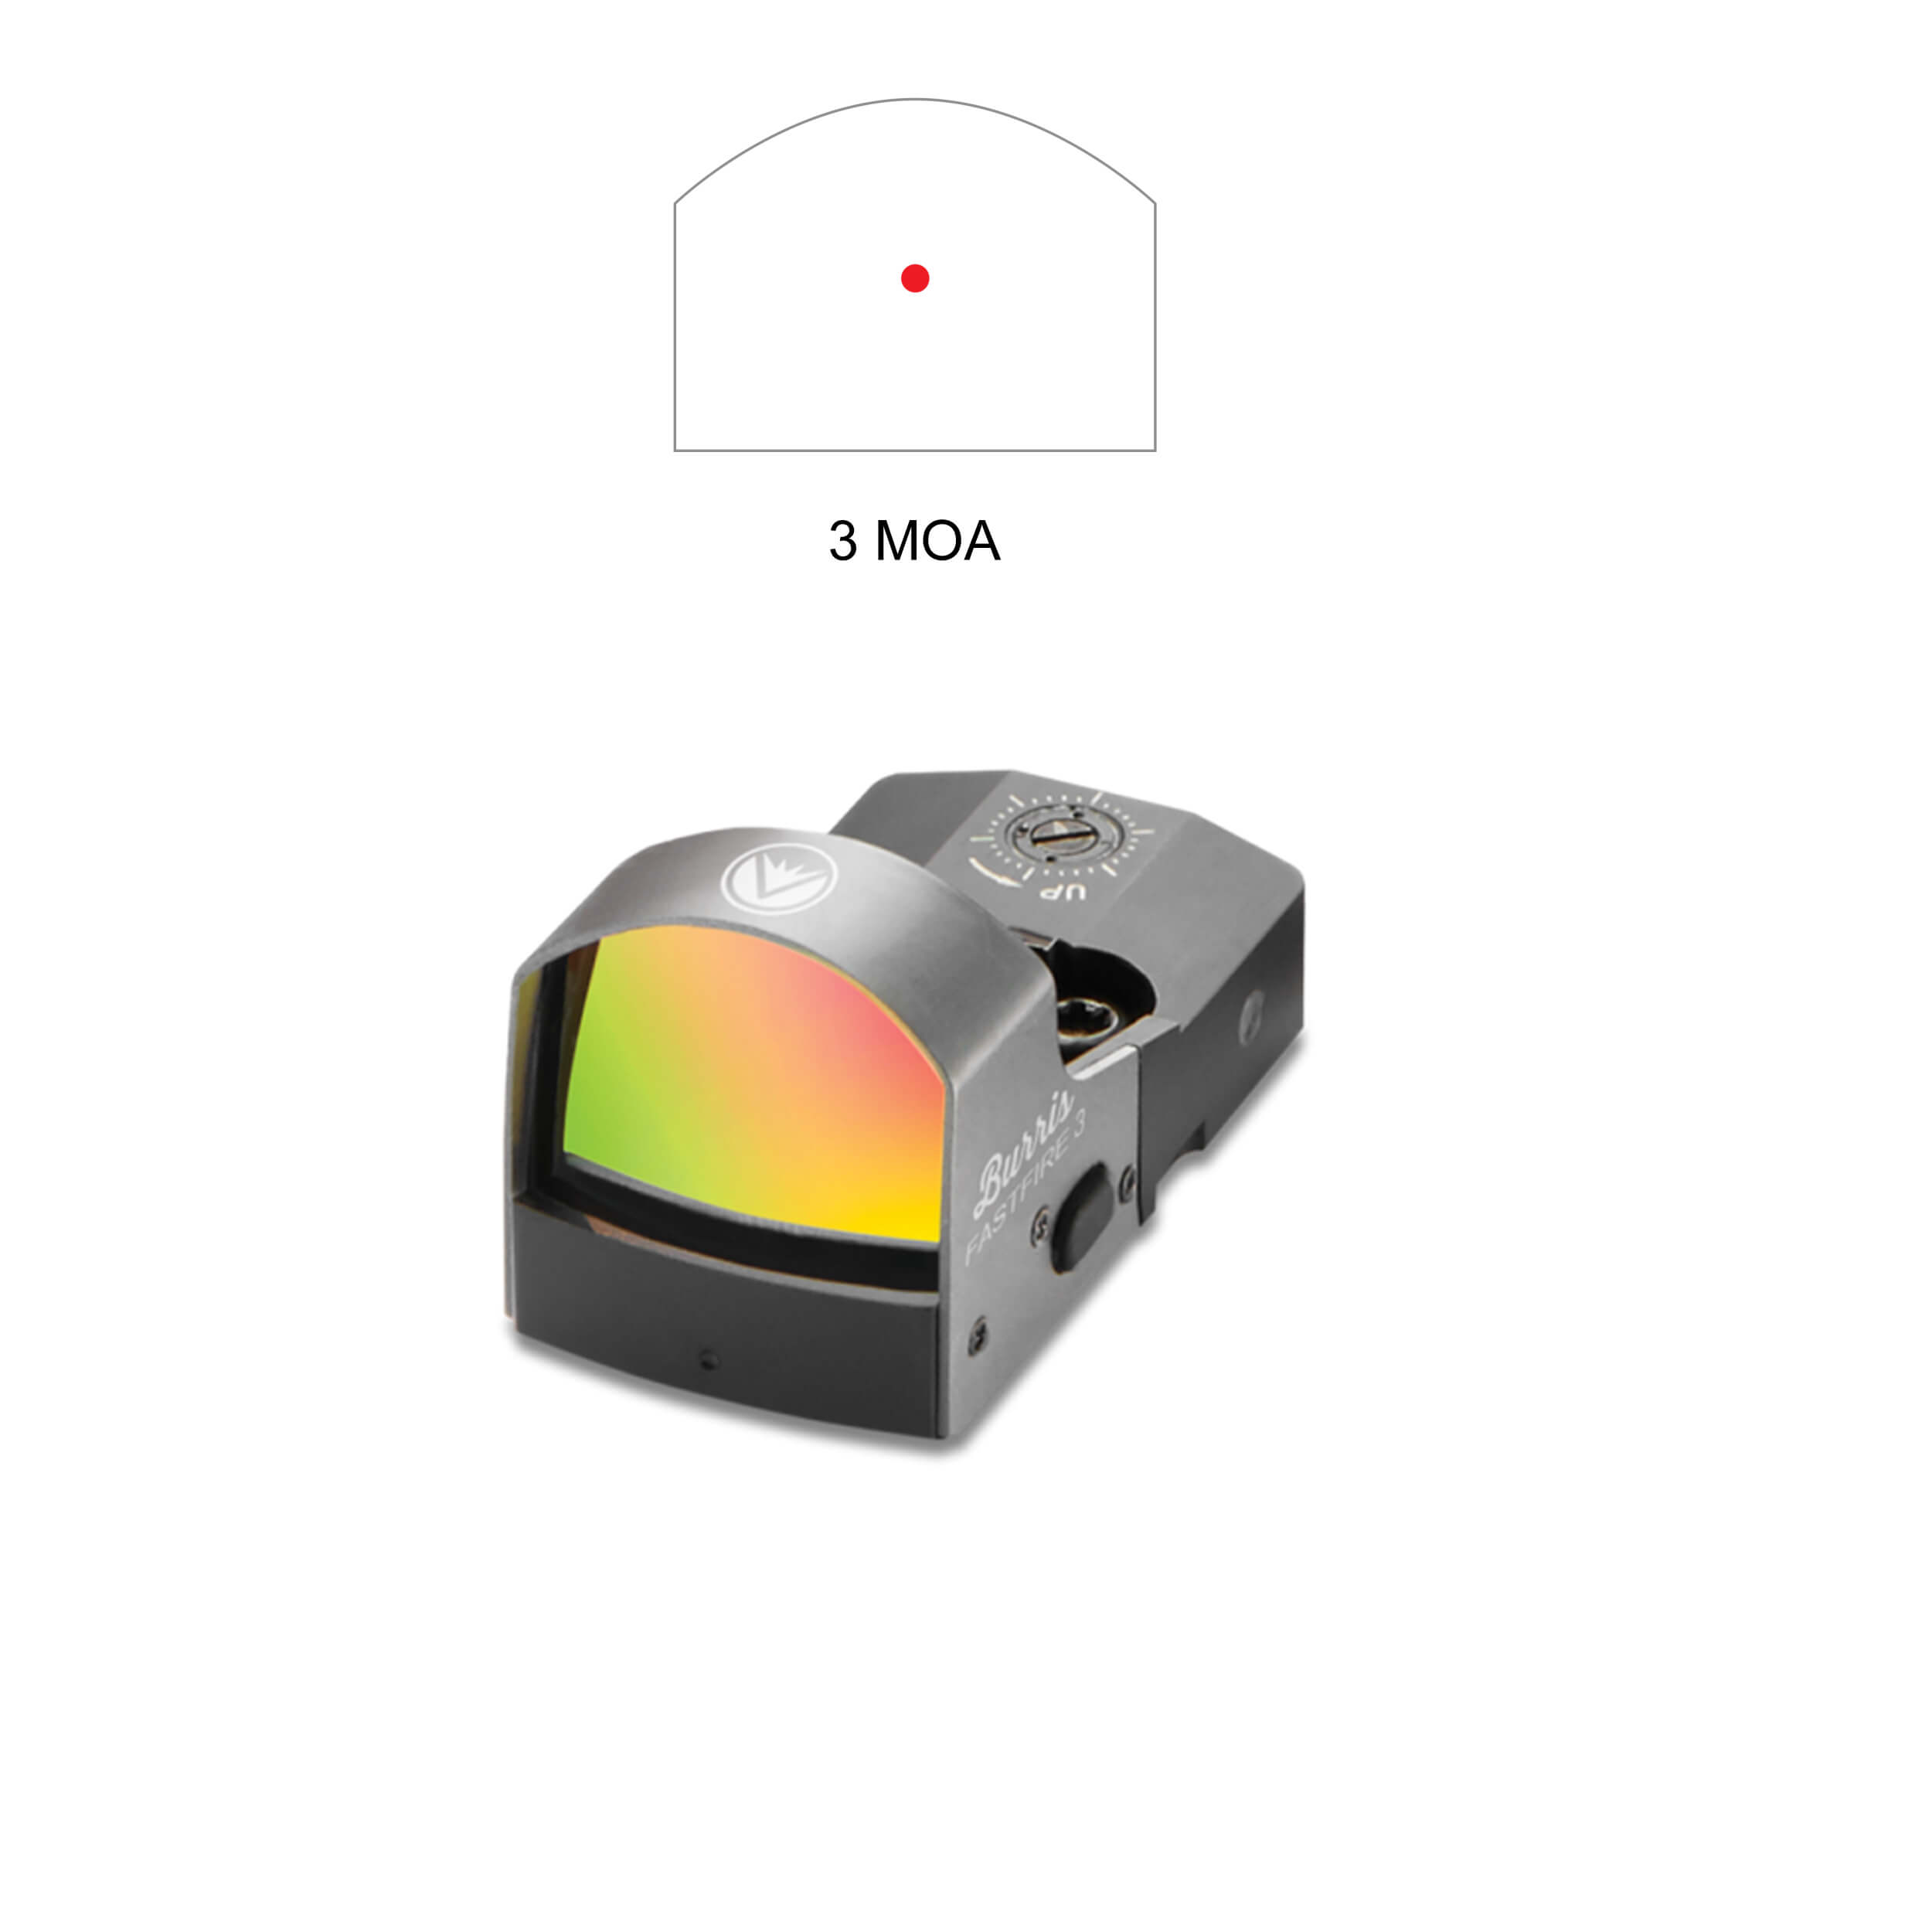 Burris FastFire III Red Dot Reflex Sight, 3 MOA Dot with Picatinny Mount - Waterproof